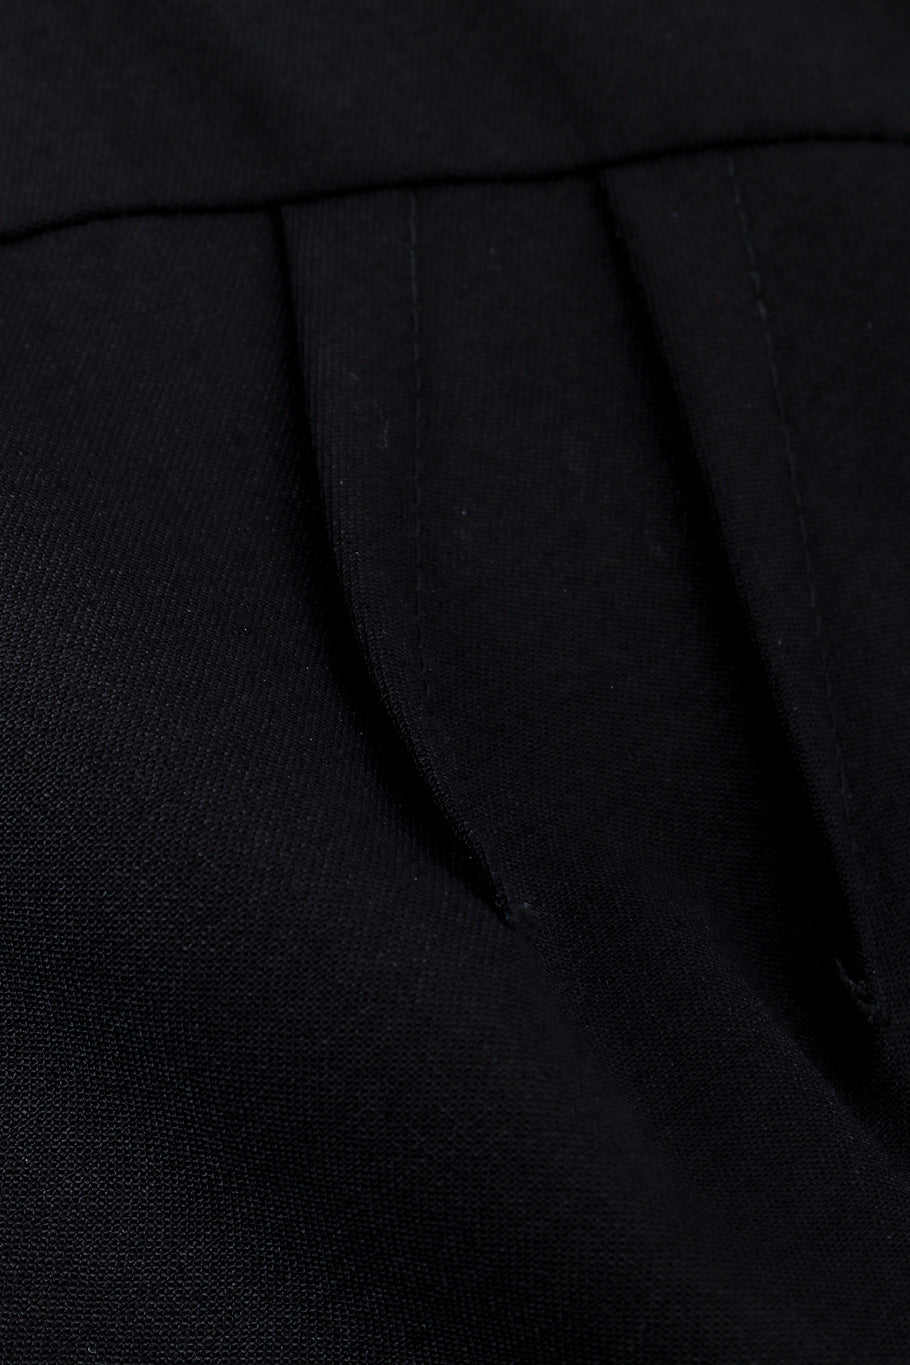 Dolce & Gabbana Metallic Trim Sheath Dress fabric closeup @recessla